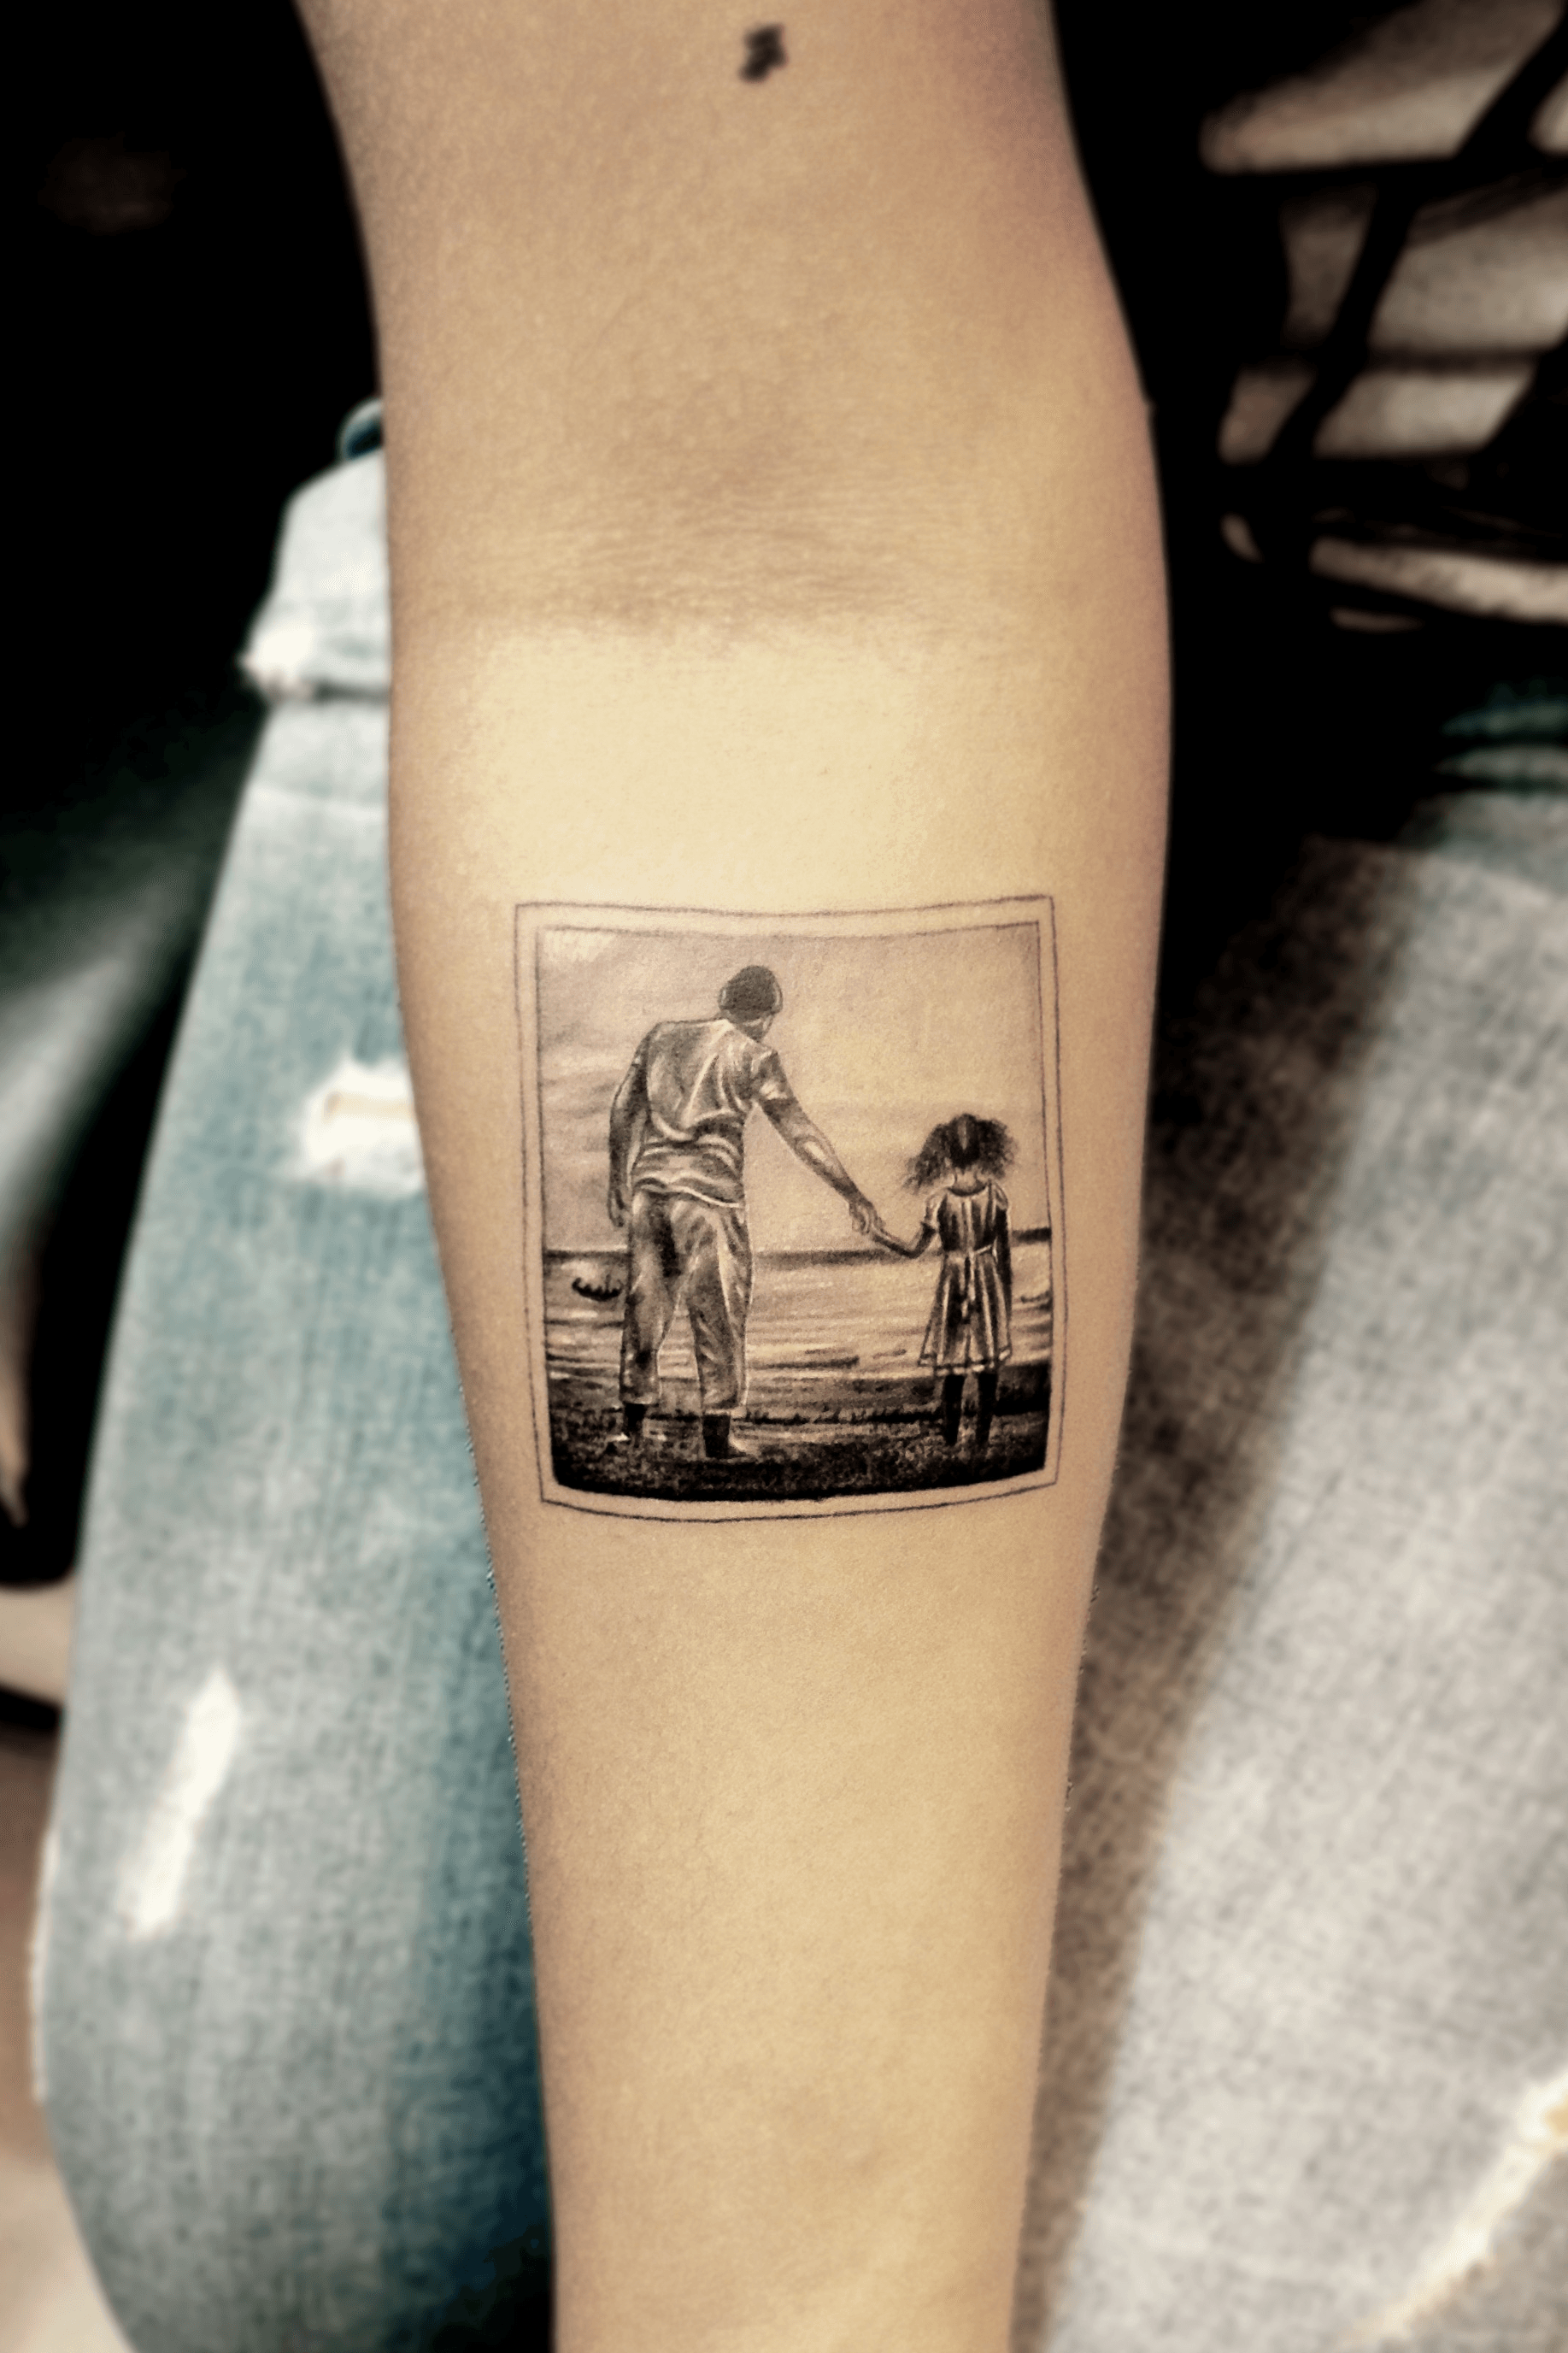 Cute meaningful tattoo last week   Amy J Tattoo Artist  Facebook